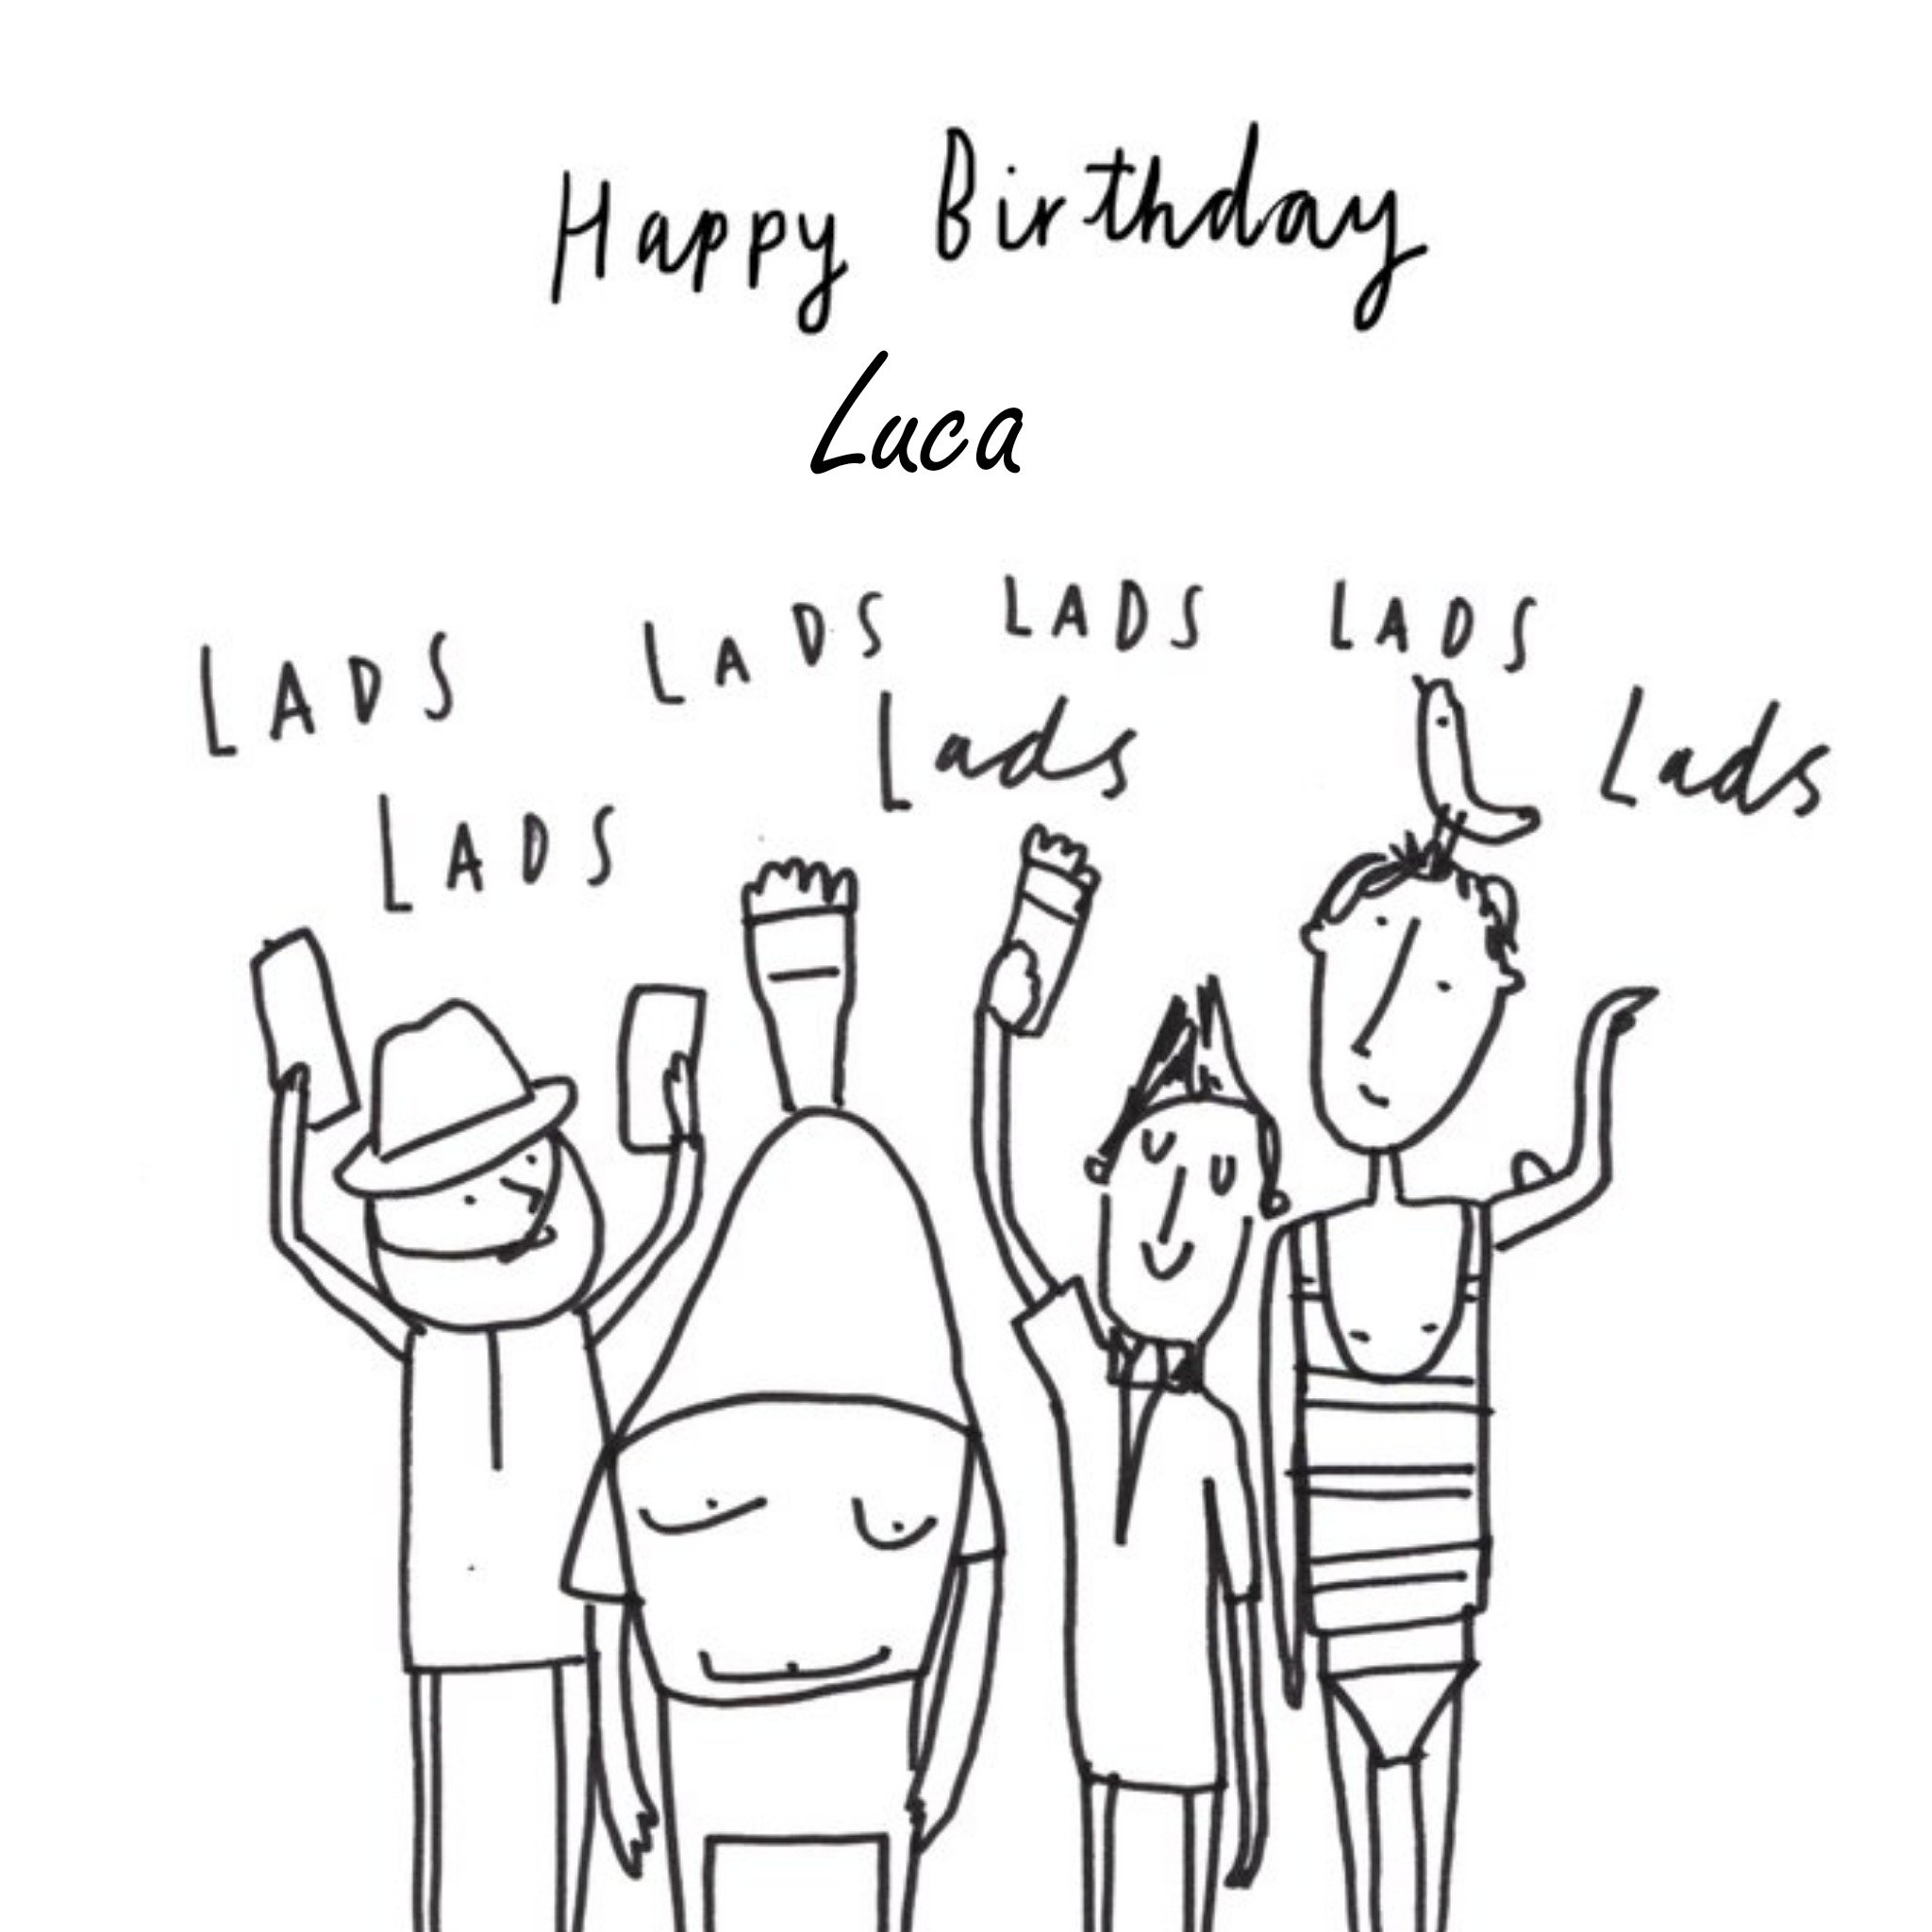 Moonpig Lads, Lads, Lads Personalised Happy Birthday Card, Large